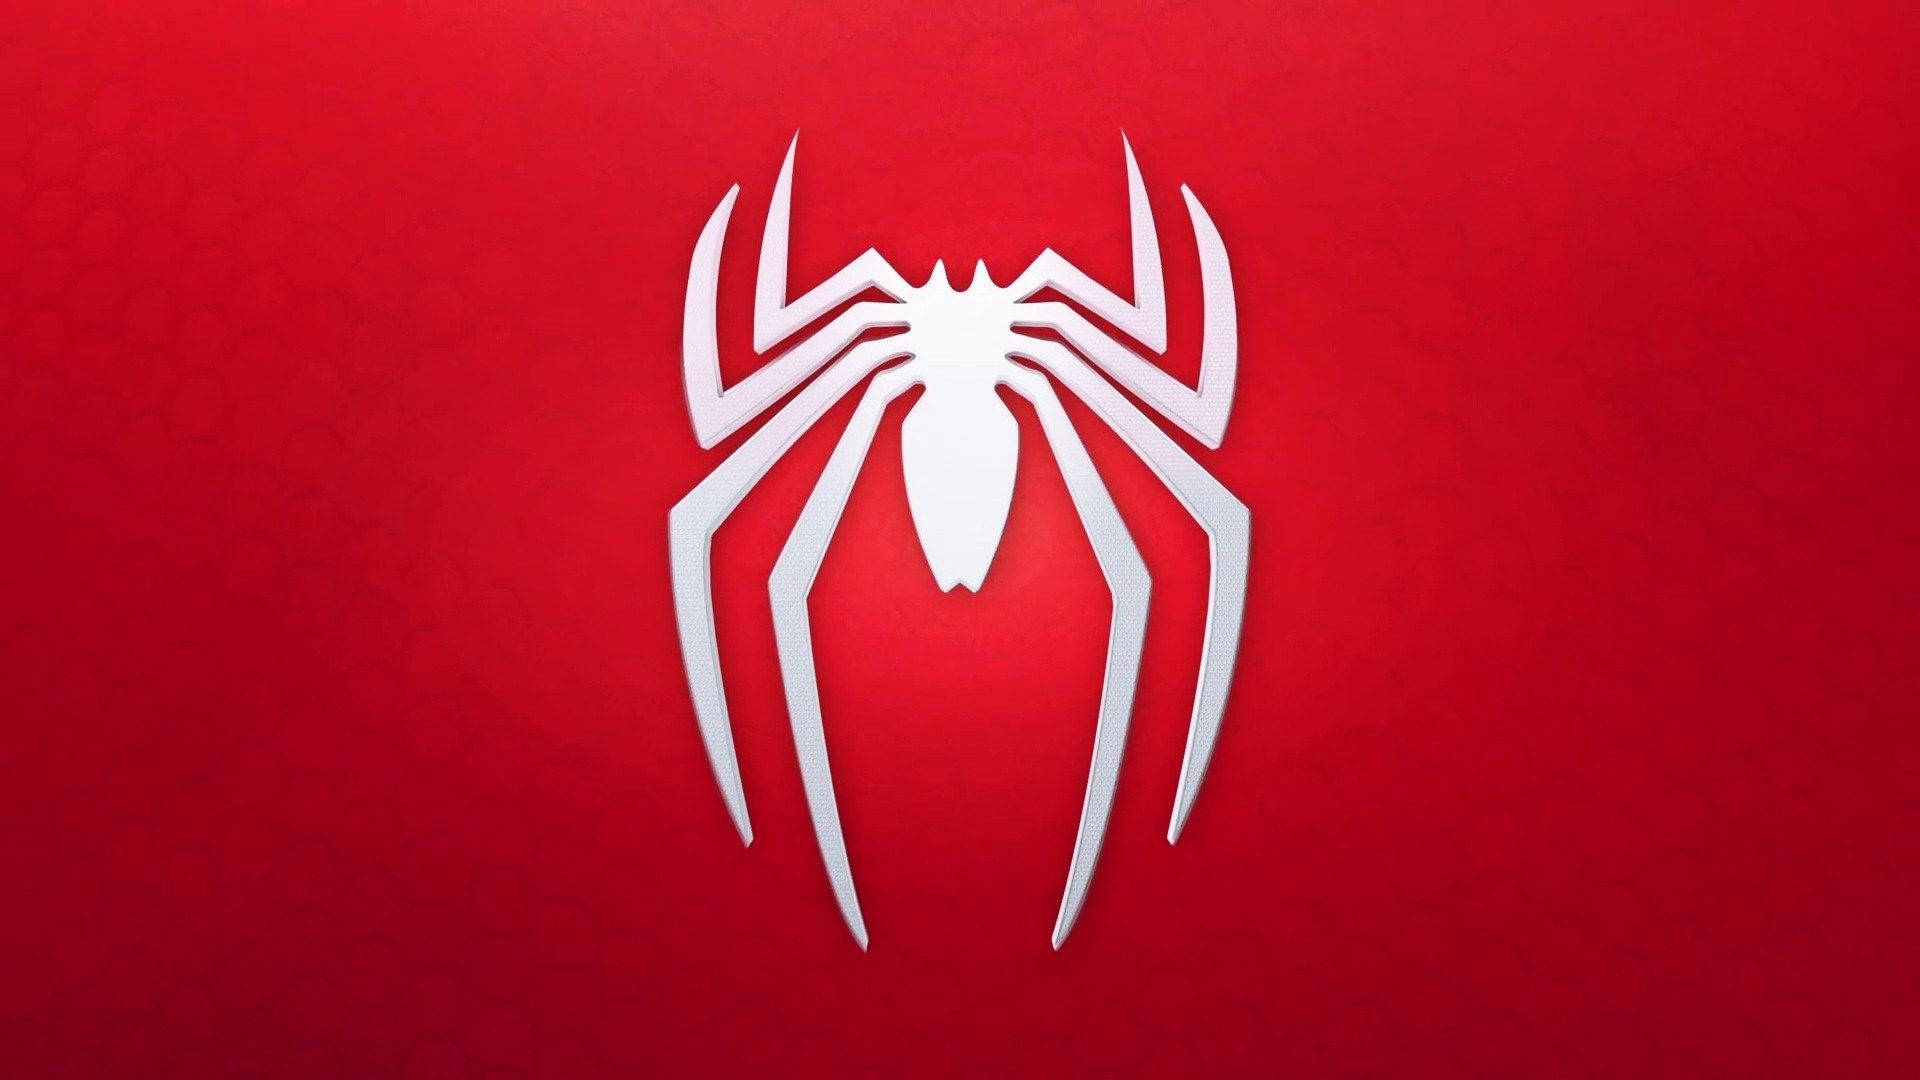 Spider-Man logo for PS4 red desktop HD wallpaper.